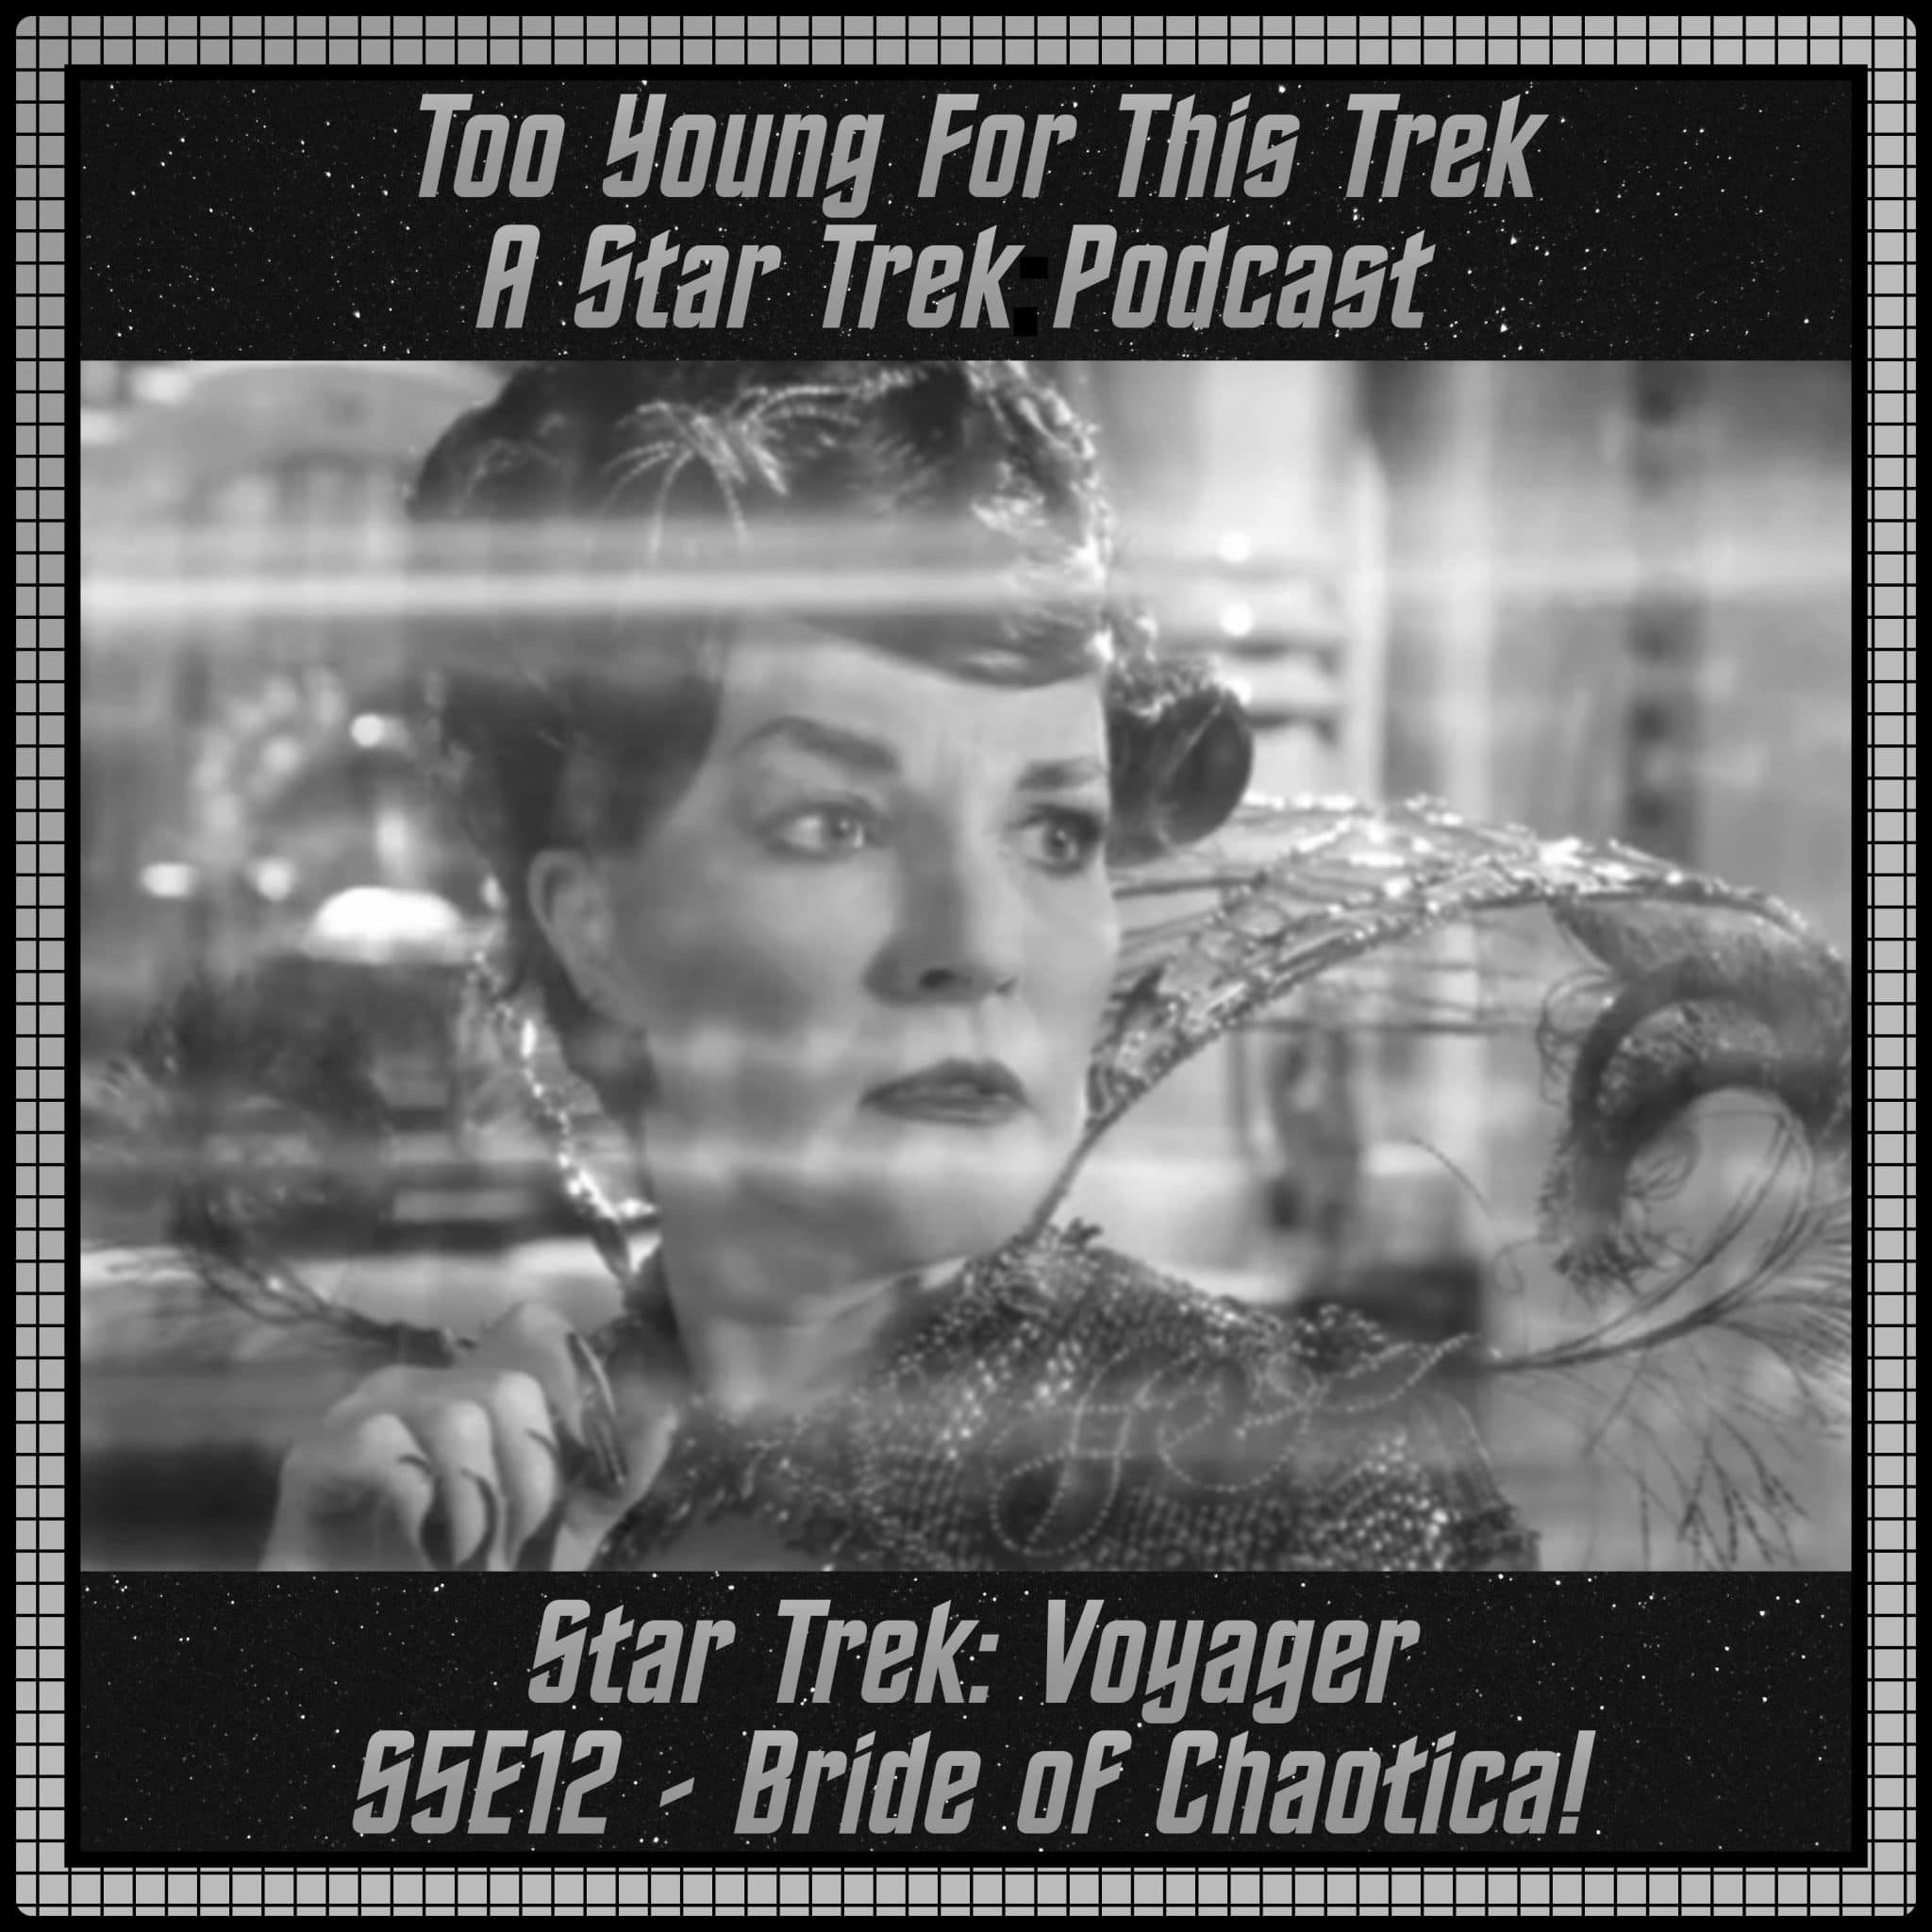 Star Trek: Voyager S5E12 - Bride of Chaotica!